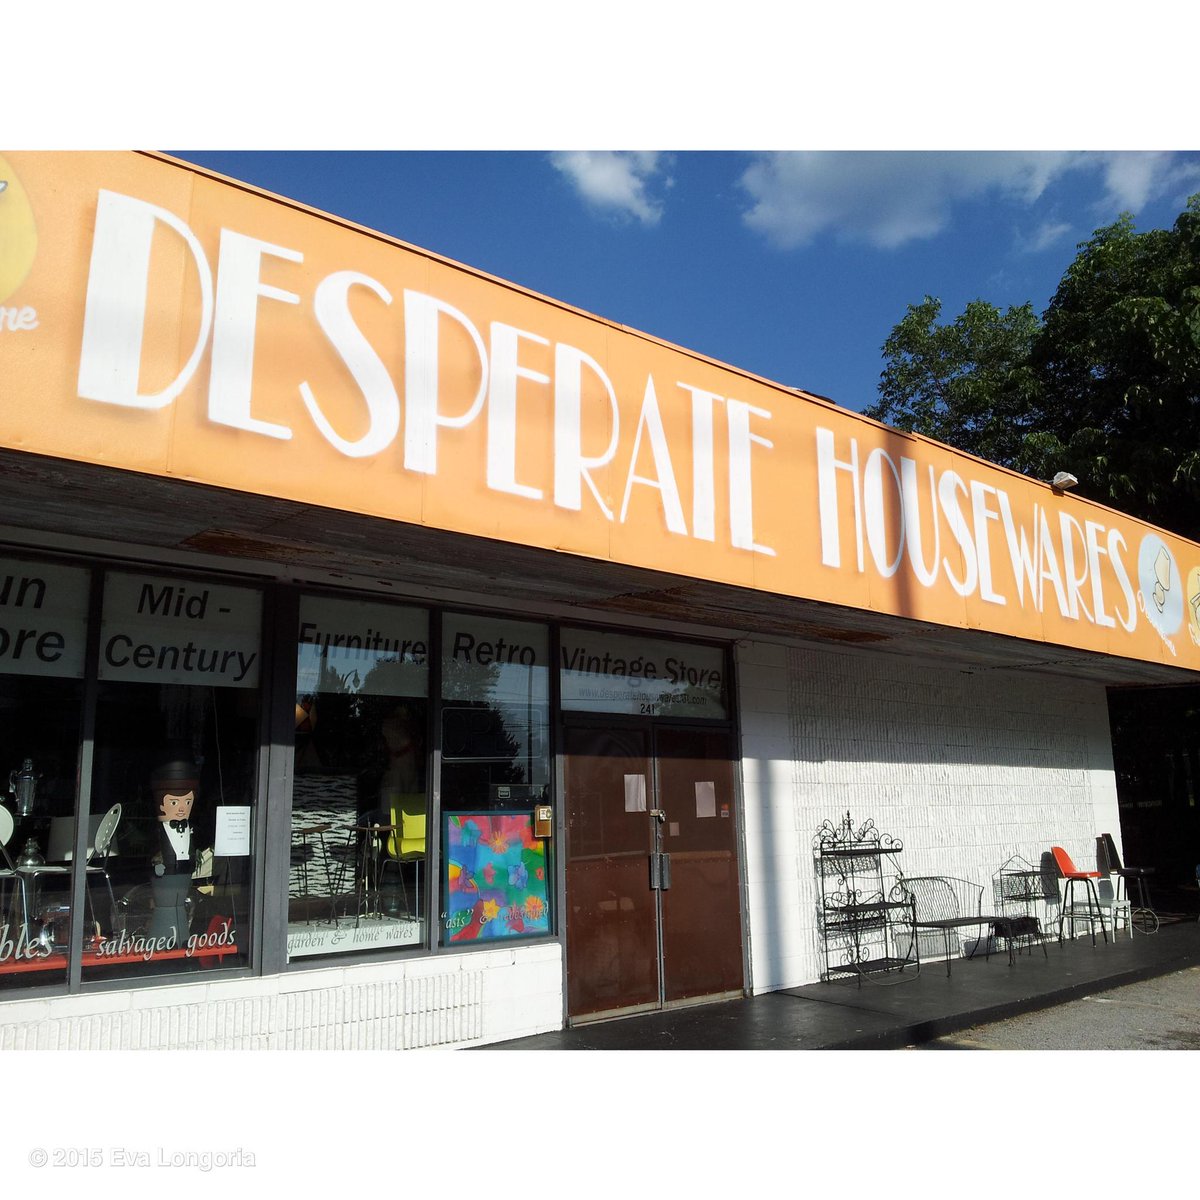 My favorite store in Atlanta....#DesperateHousewares #DH #TooFunny http://t.co/5PaoGvScMv